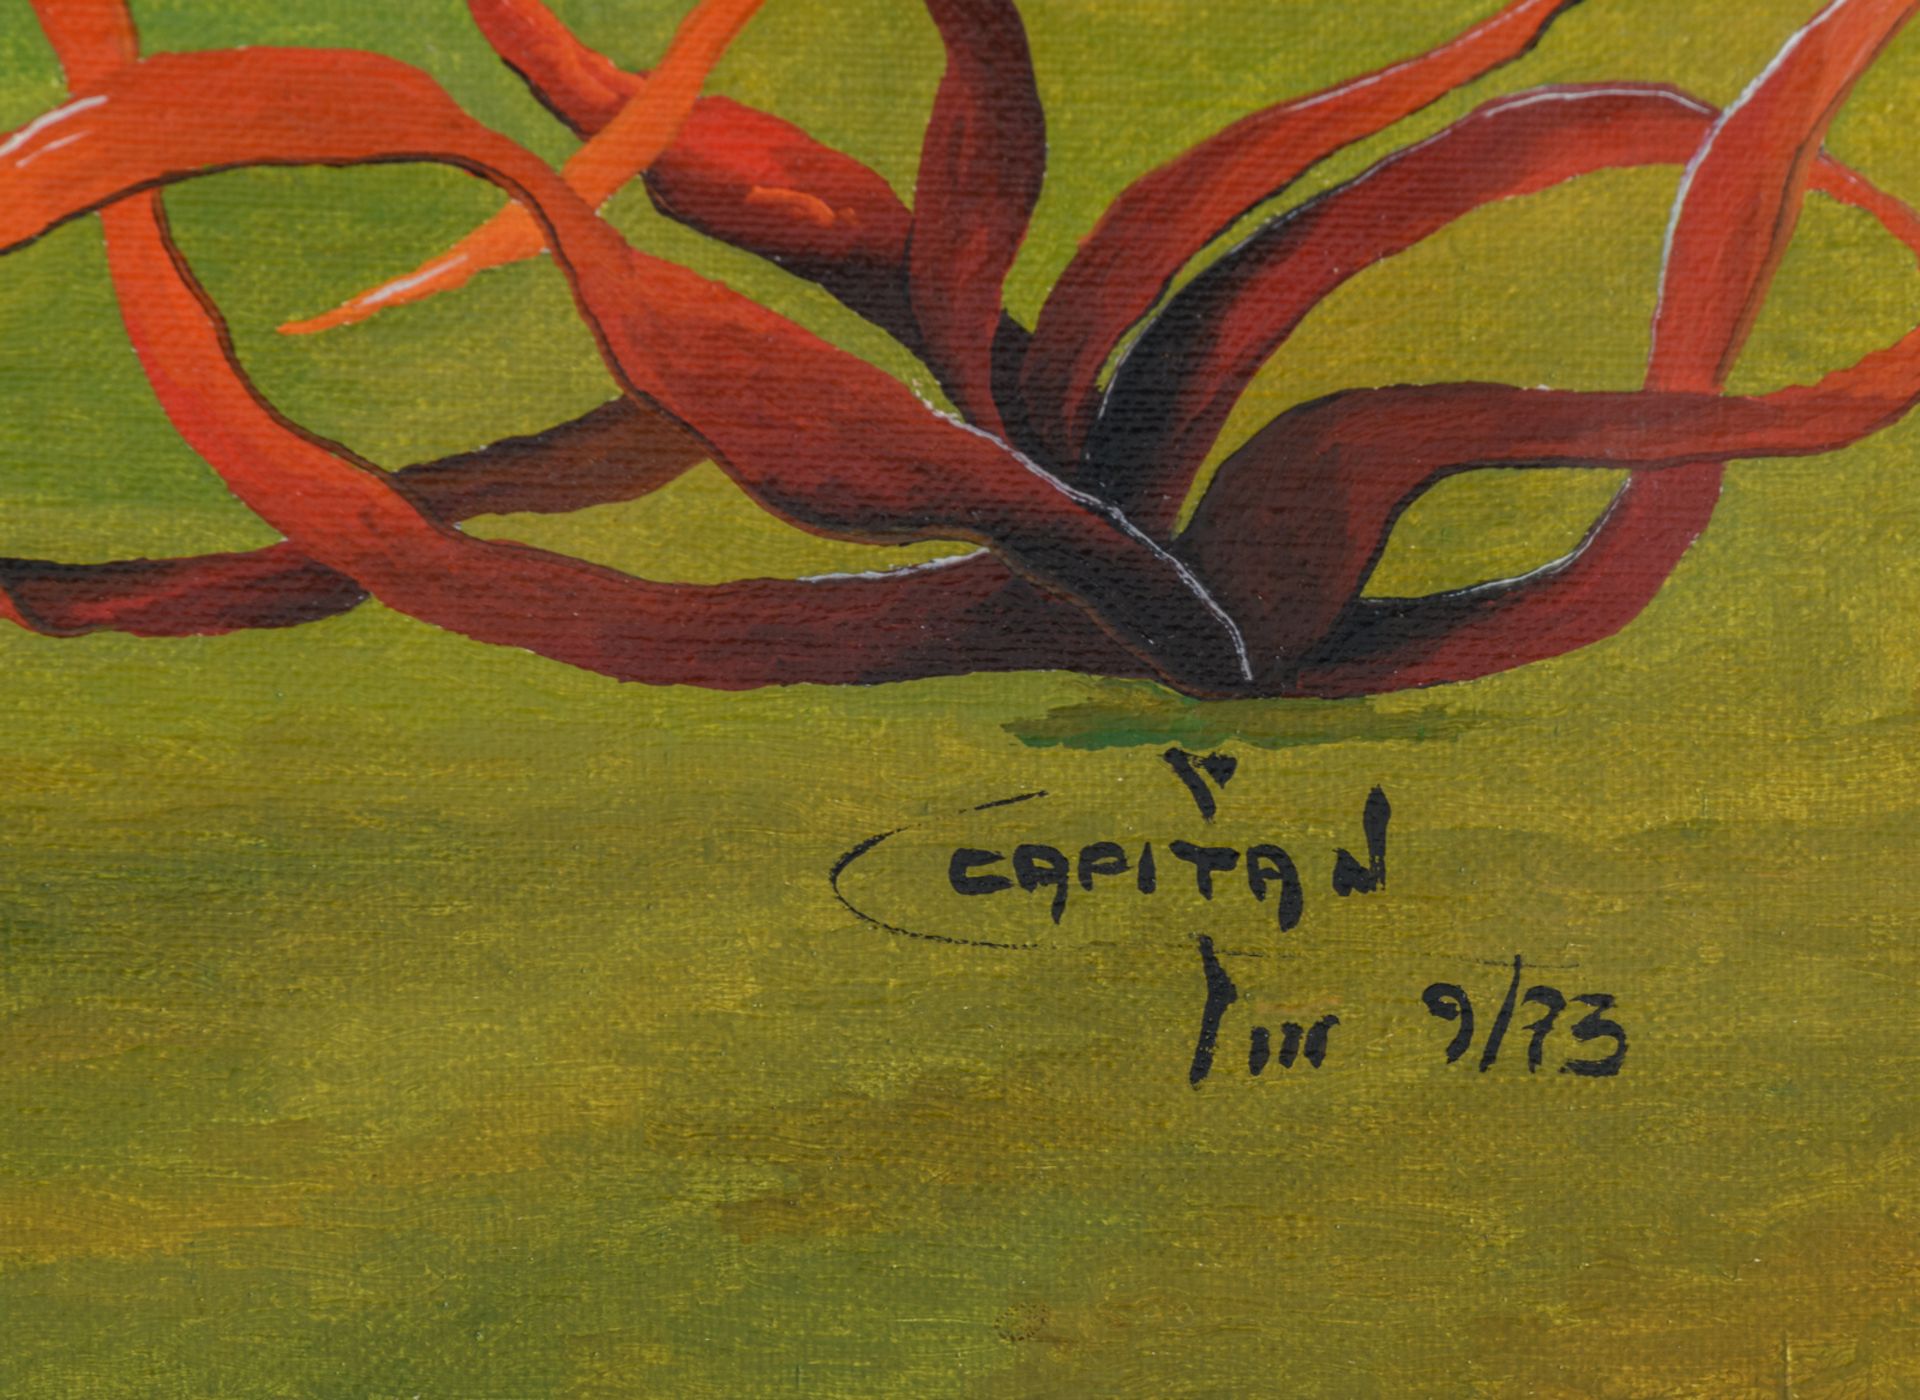 Capitan C. (Henri Van Rolleghem), 'Le printemps', oil on canvas, dated (19)73, 100 x 100 cm - Image 4 of 4